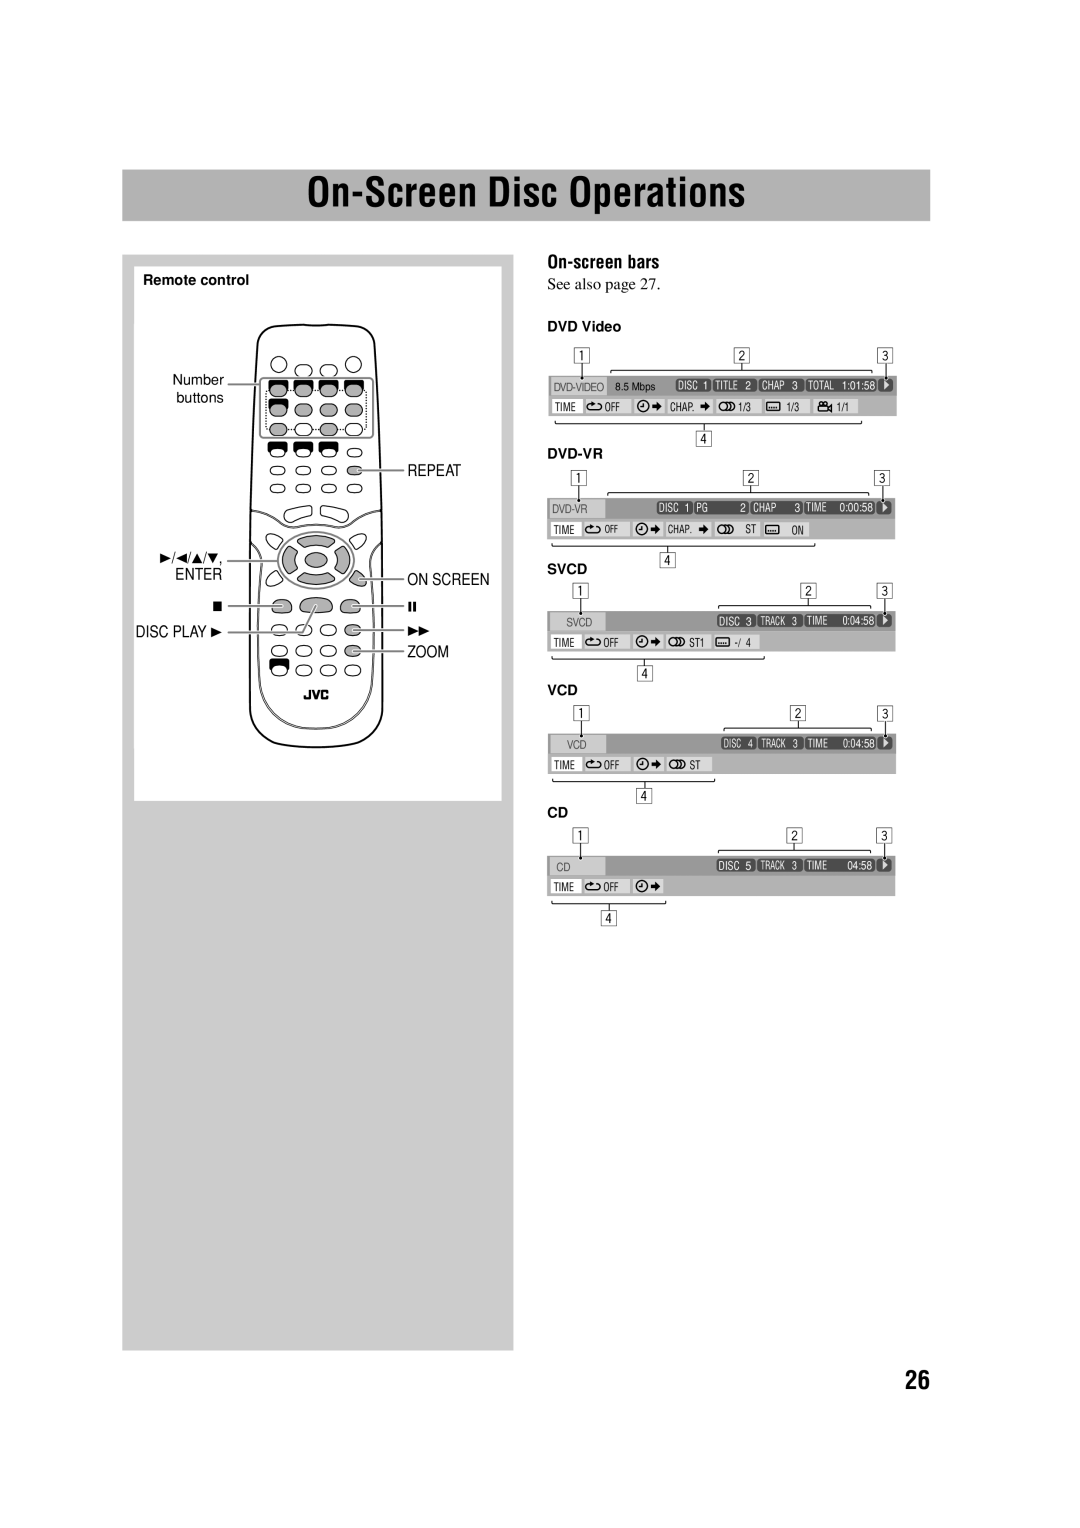 JVC HX-D77 manual On-ScreenDisc Operations, On-screenbars 